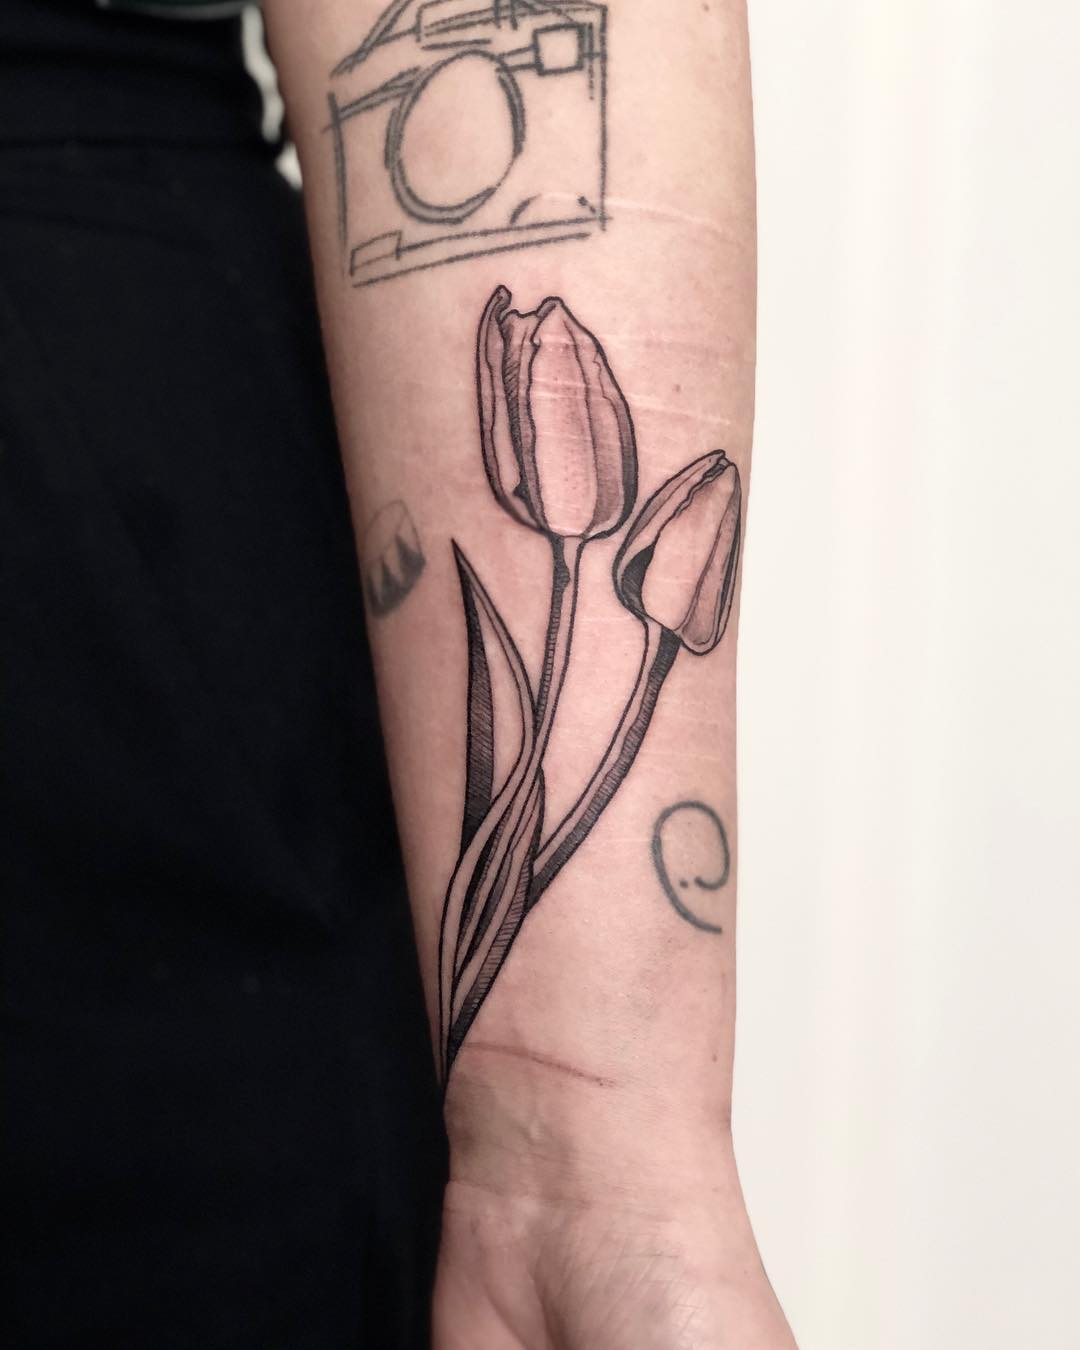 No. 2 für @maypacked  #tulpen #tulips #tulip #blackwork #art #artwork #blackwork